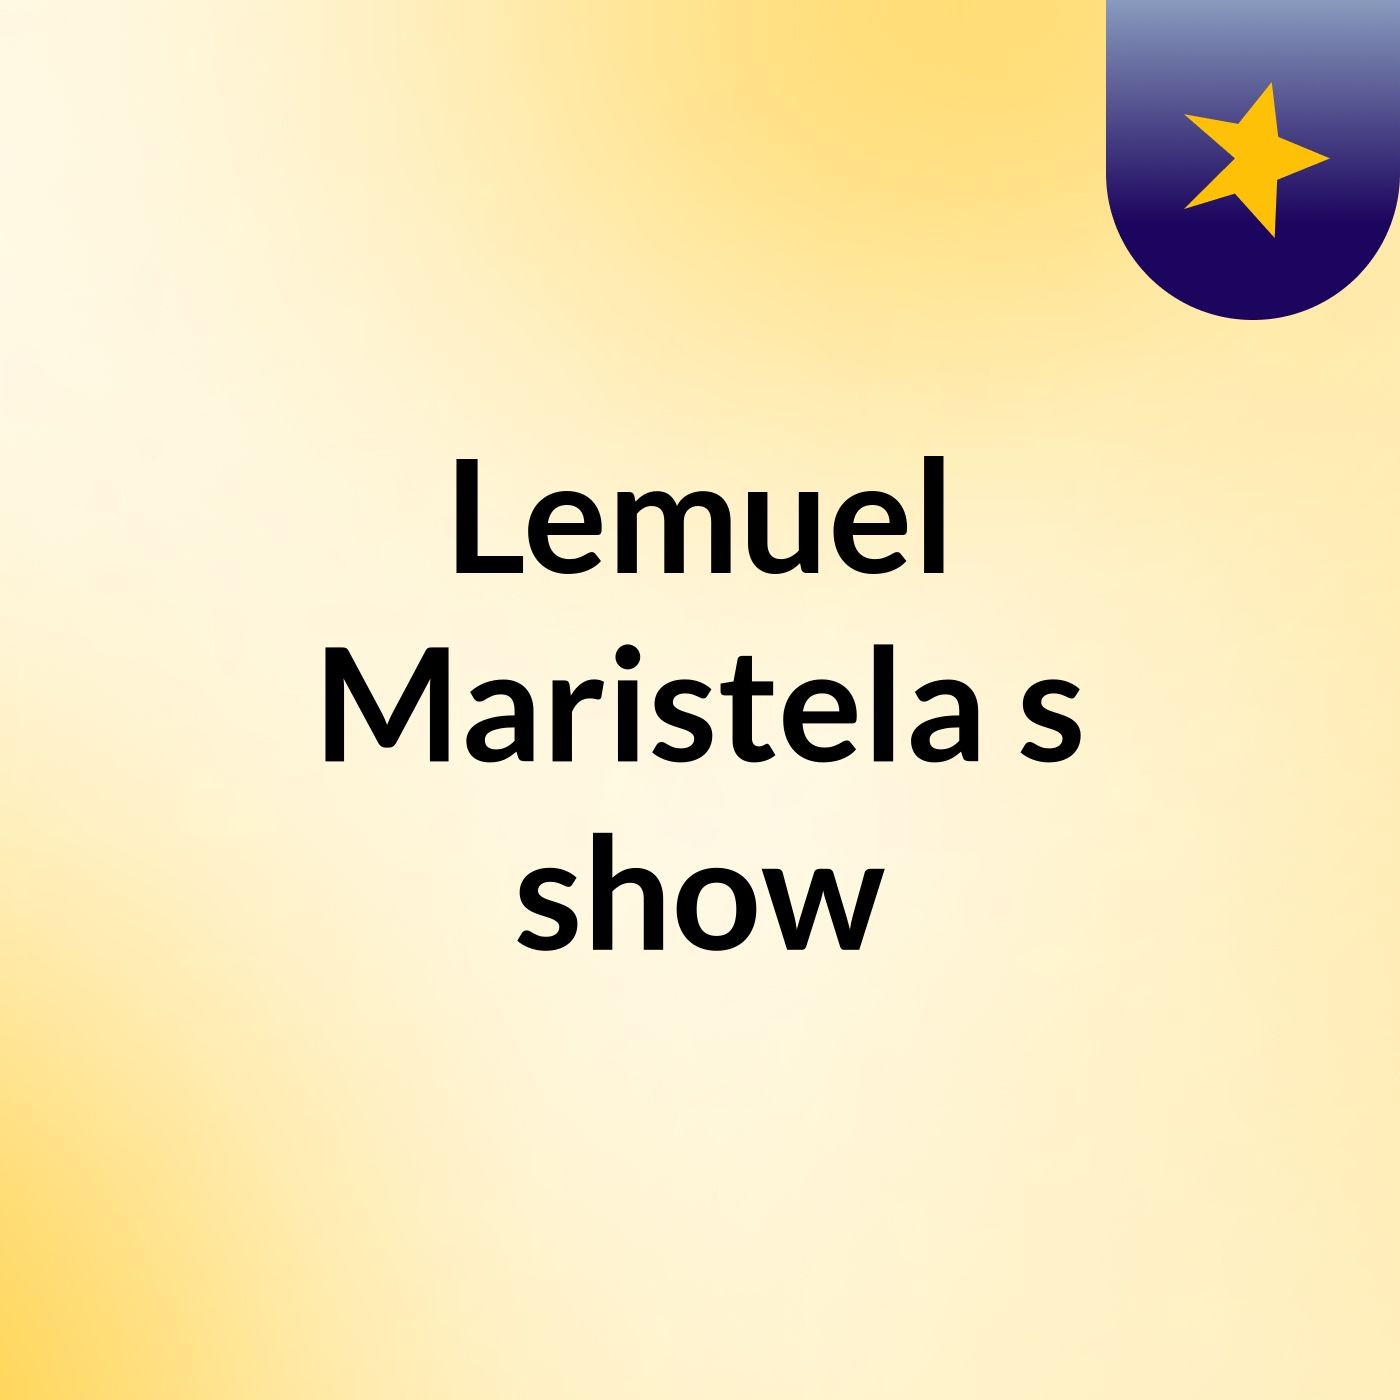 Lemuel Maristela's show